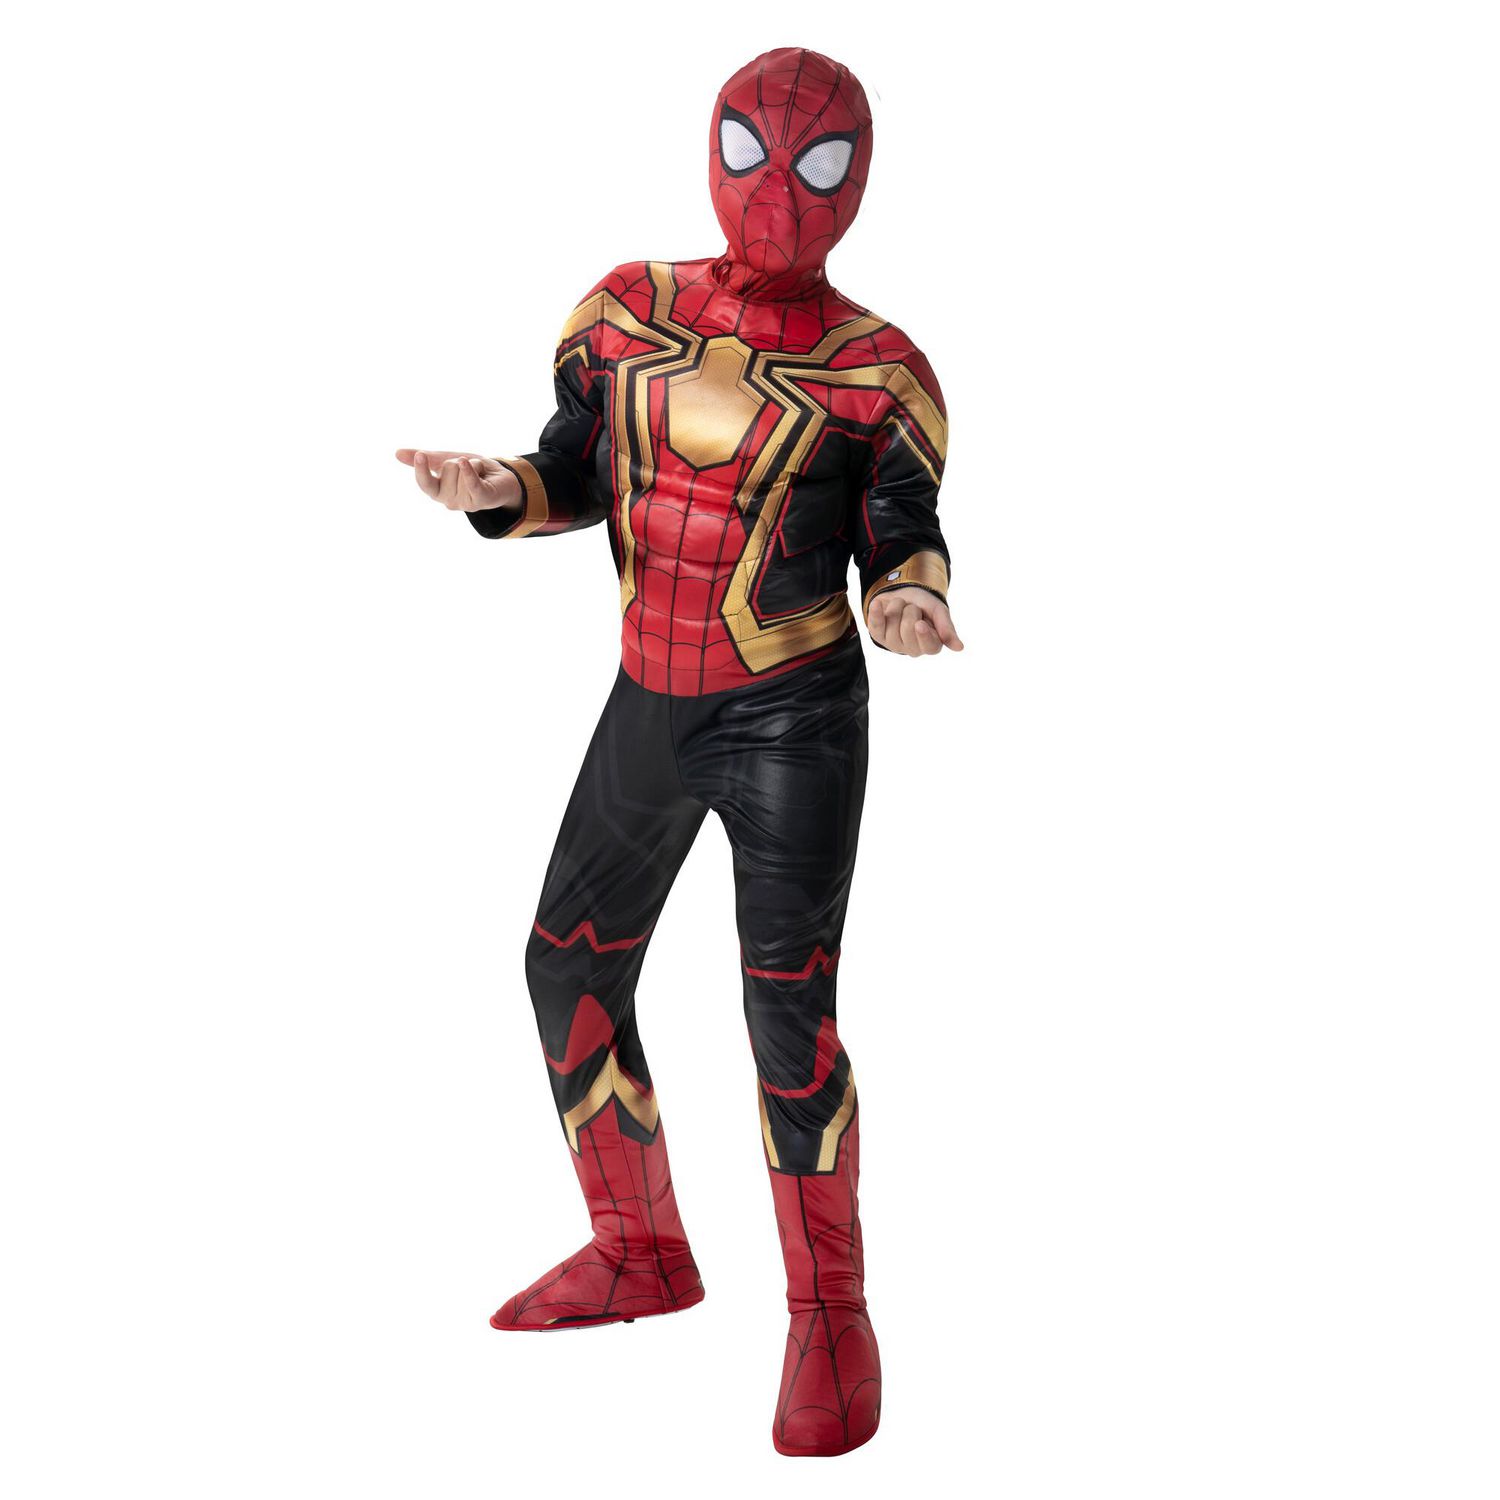 Spider-Man: No Way Home Concept Art Shows Green Goblin Iron Man Suit